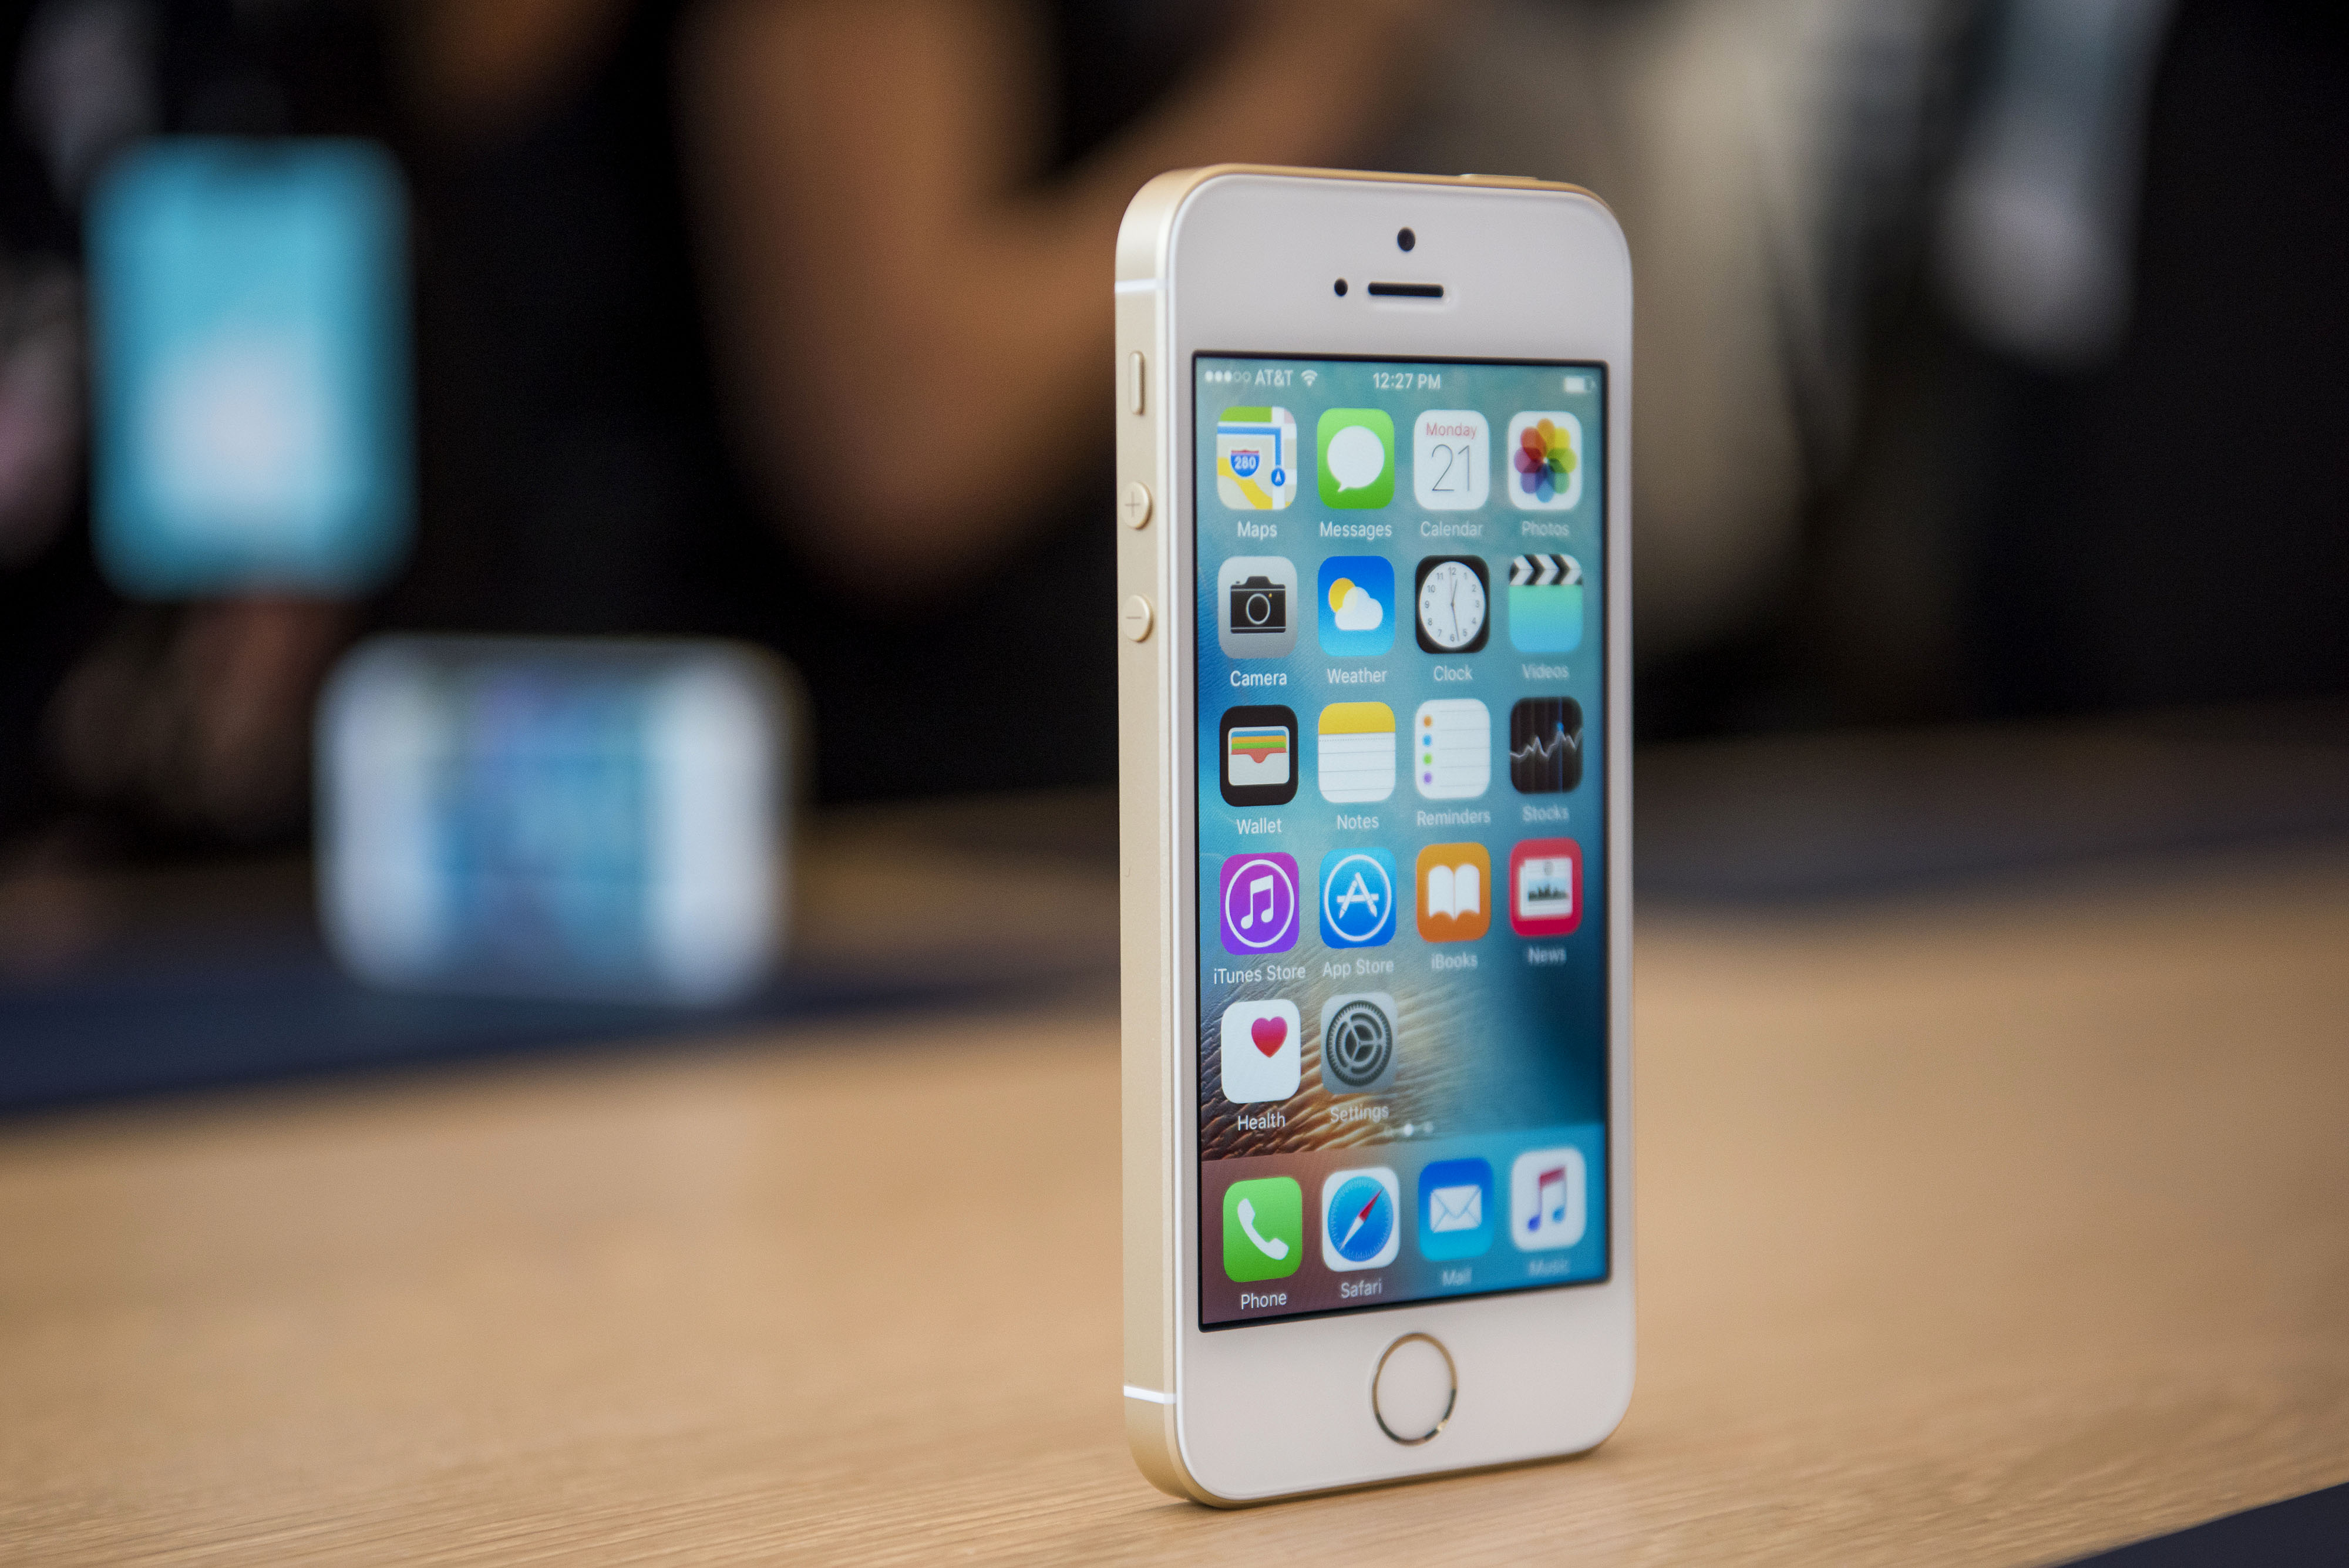 Apple Inc. Announces New iPhone And iPad Pro